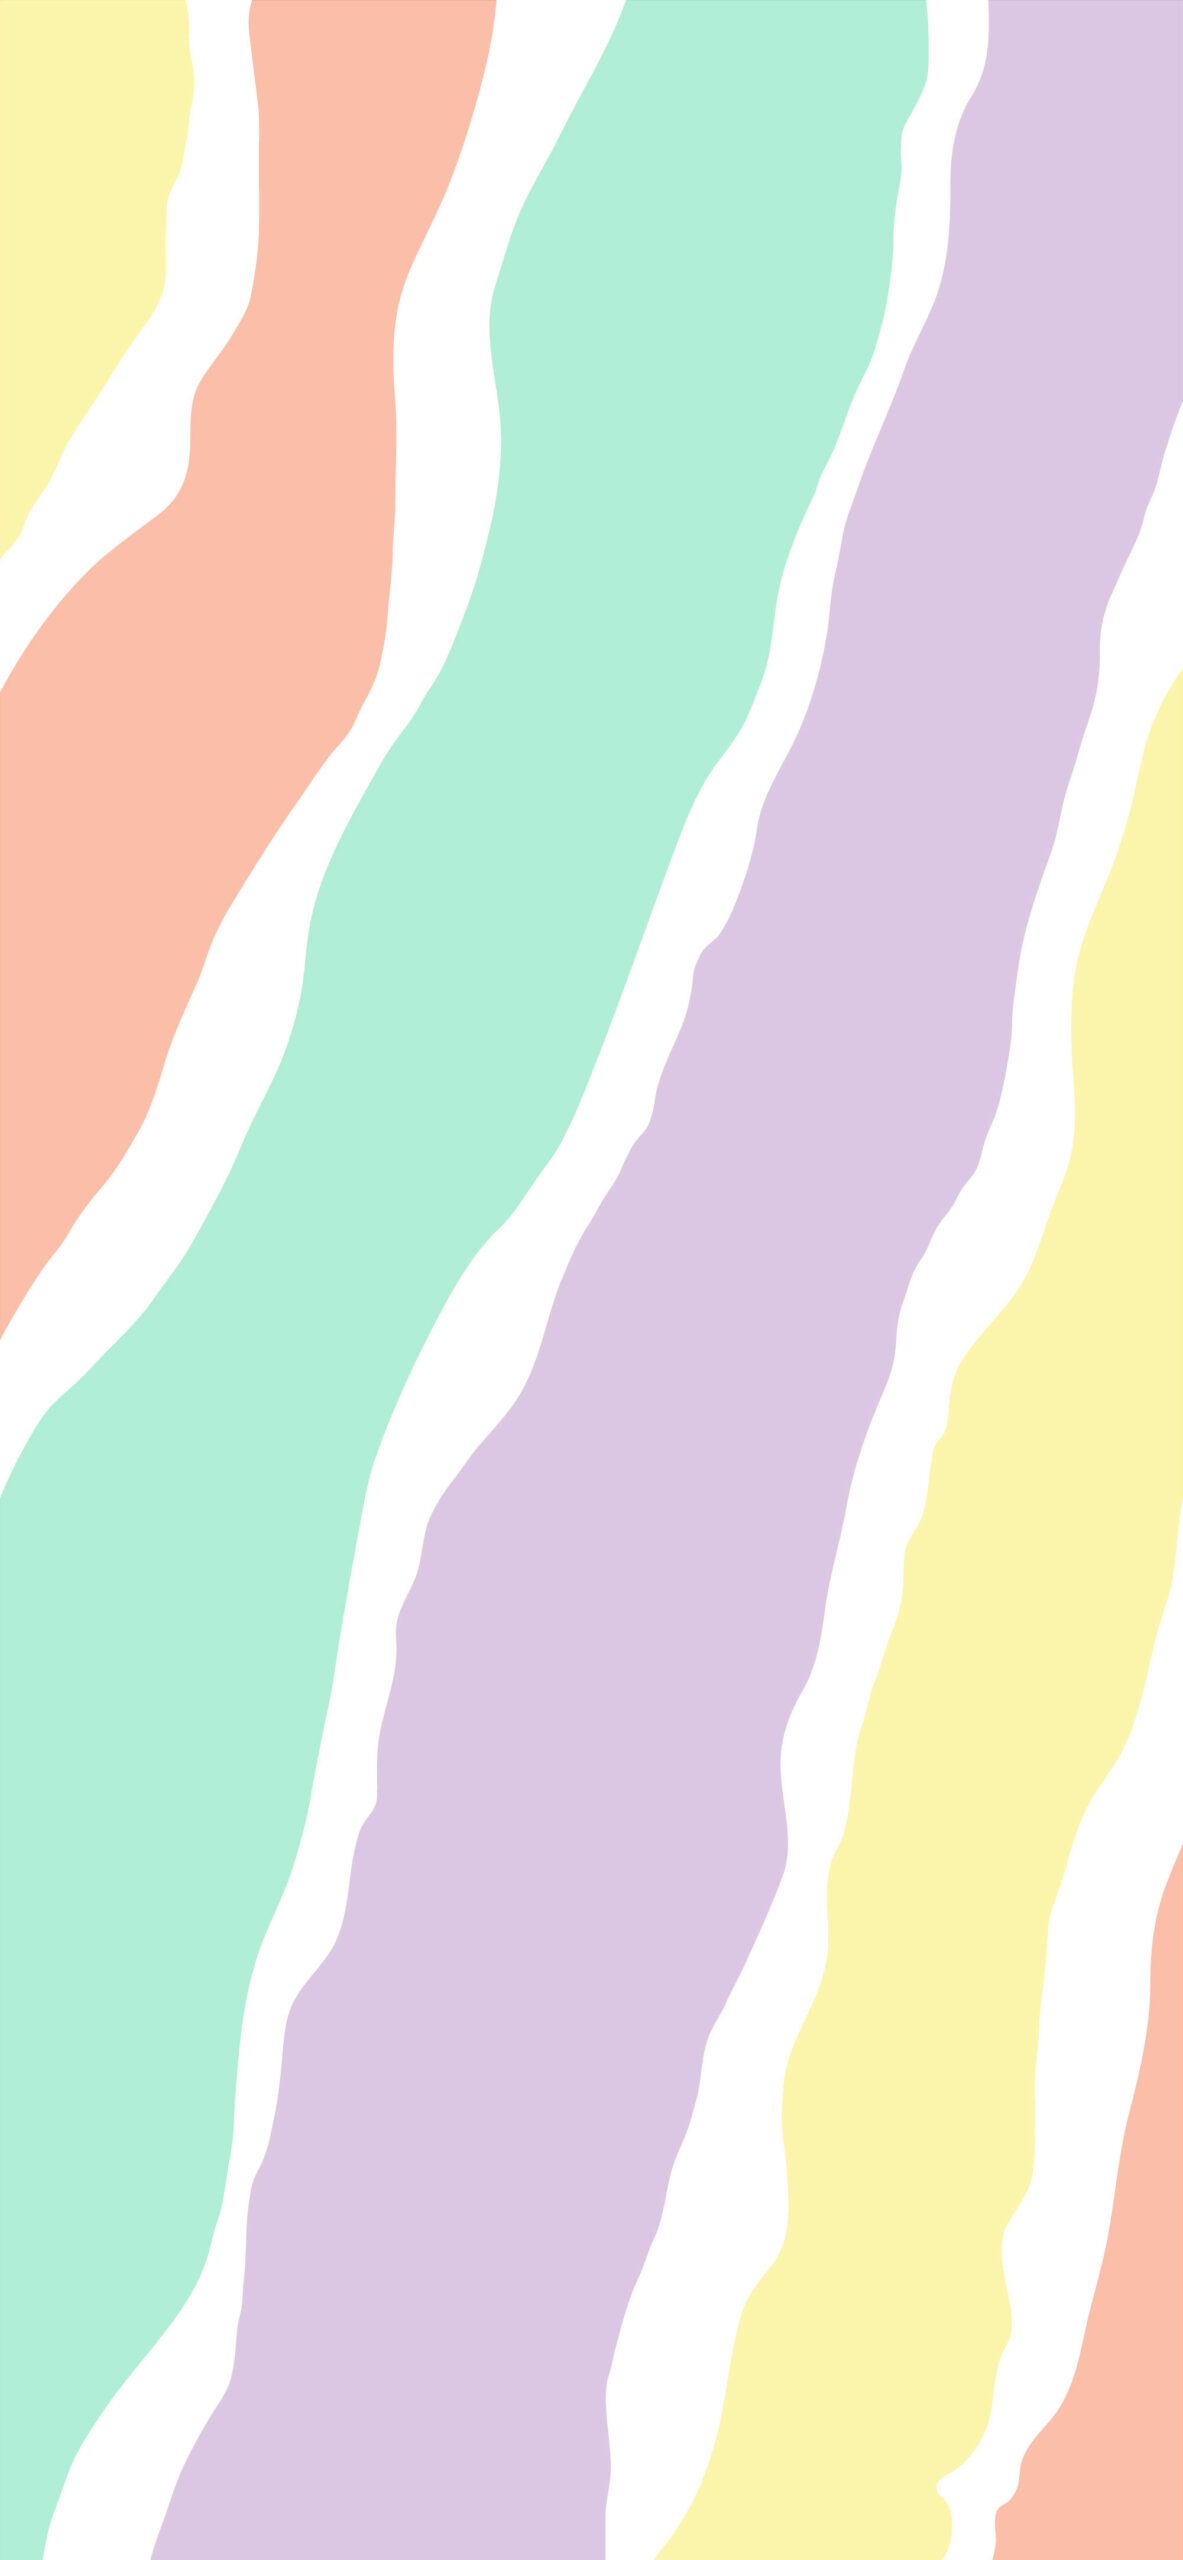 A wavy pattern of pastel colors - Pastel, pastel minimalist, pastel rainbow